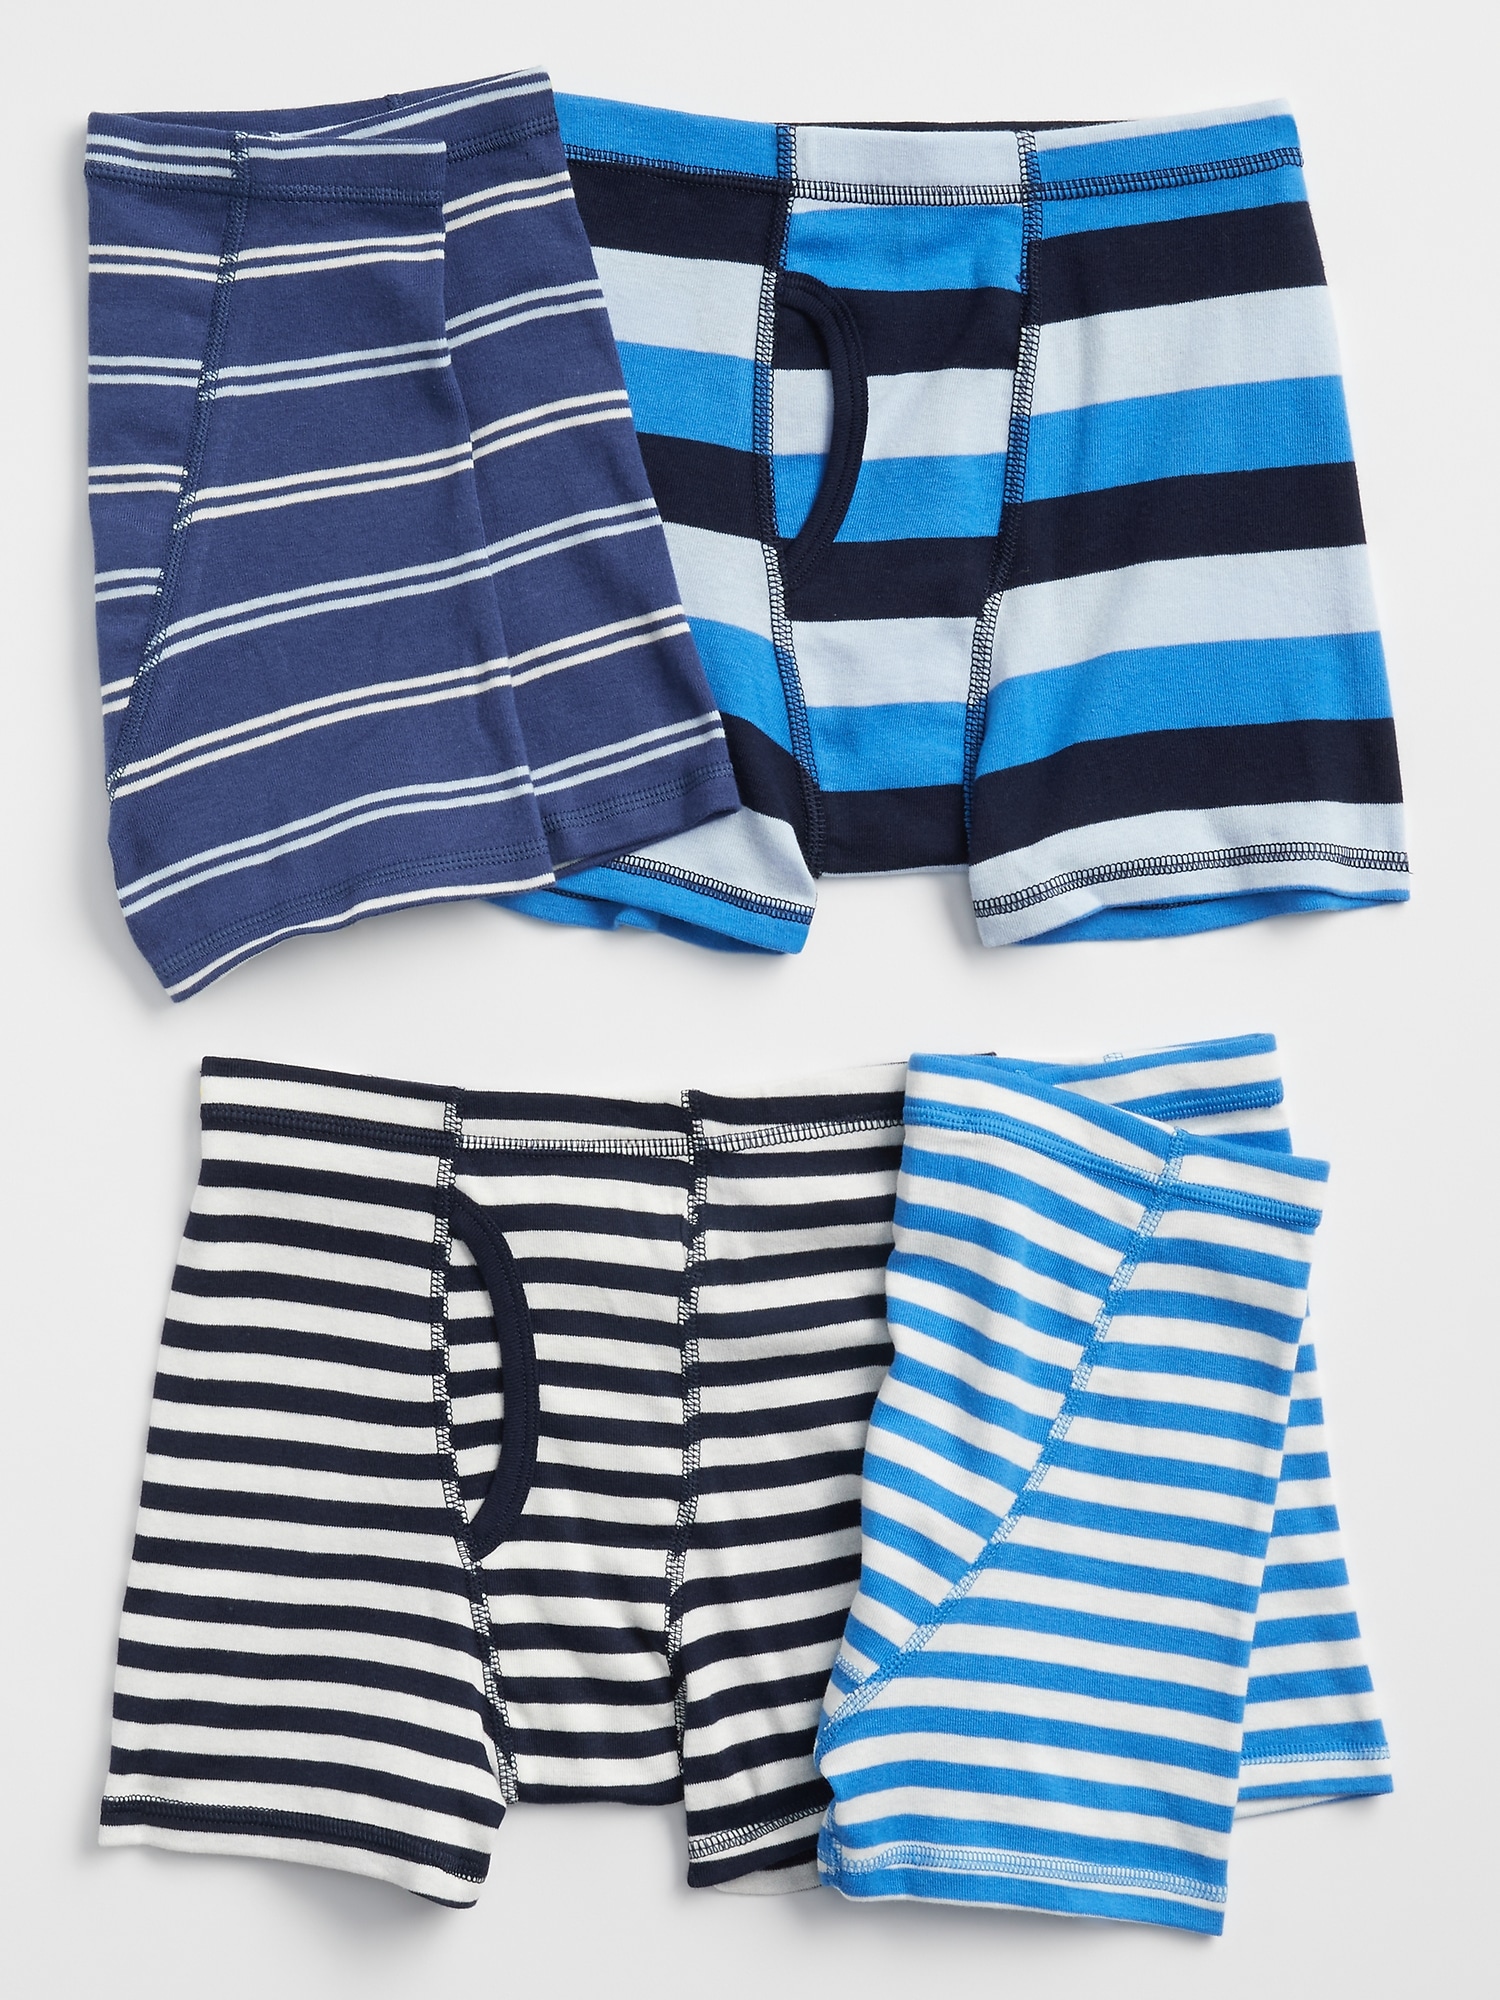 Baby Gap Factory NWT Sea Shark 7 Days-of-the-Week Briefs Underwear